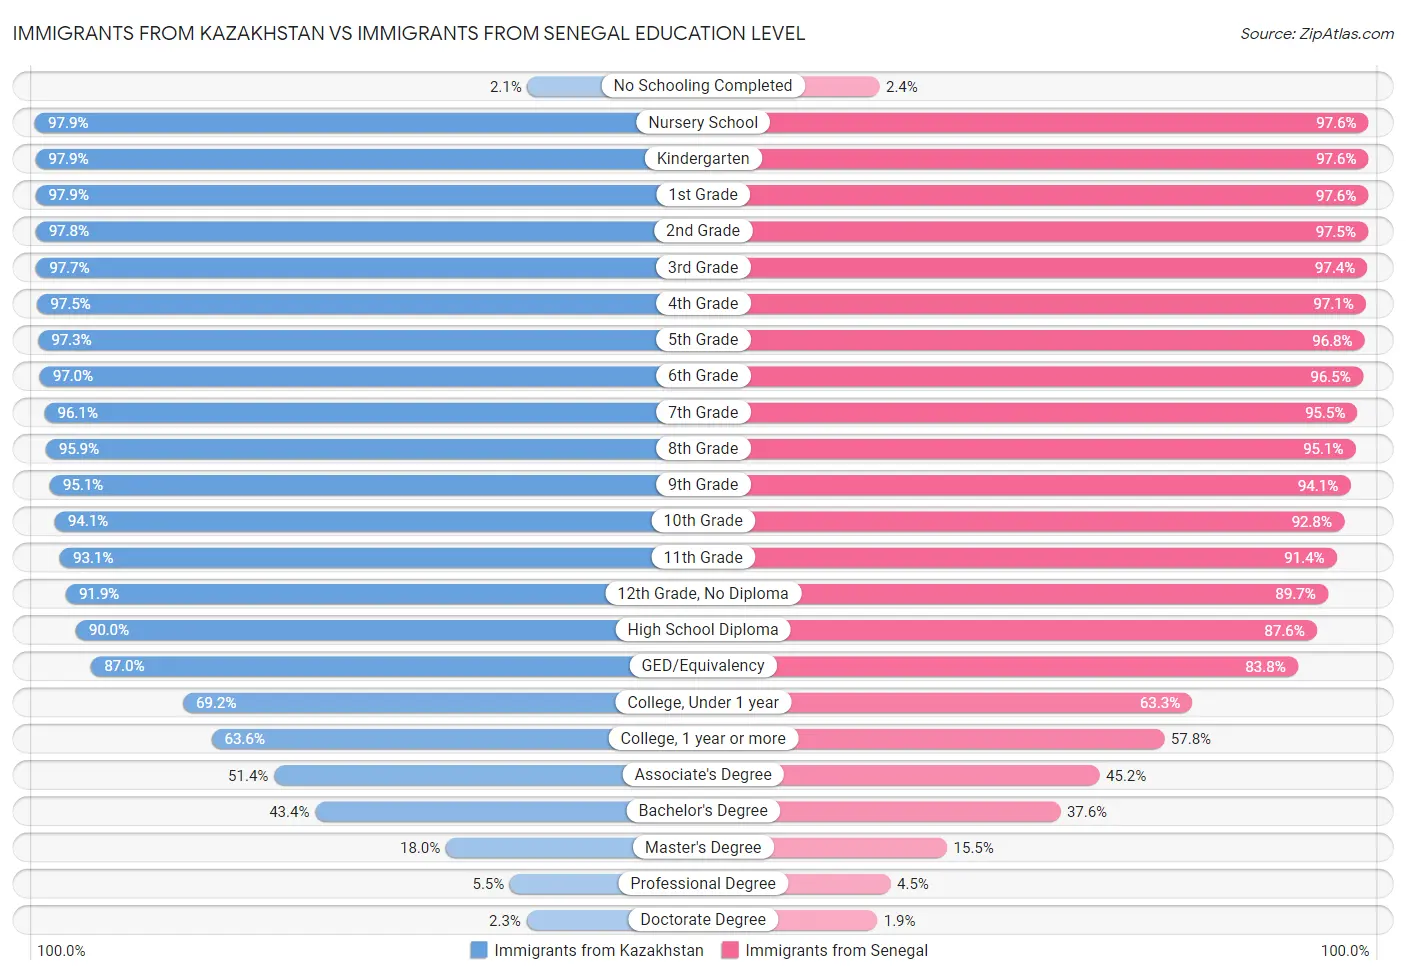 Immigrants from Kazakhstan vs Immigrants from Senegal Education Level